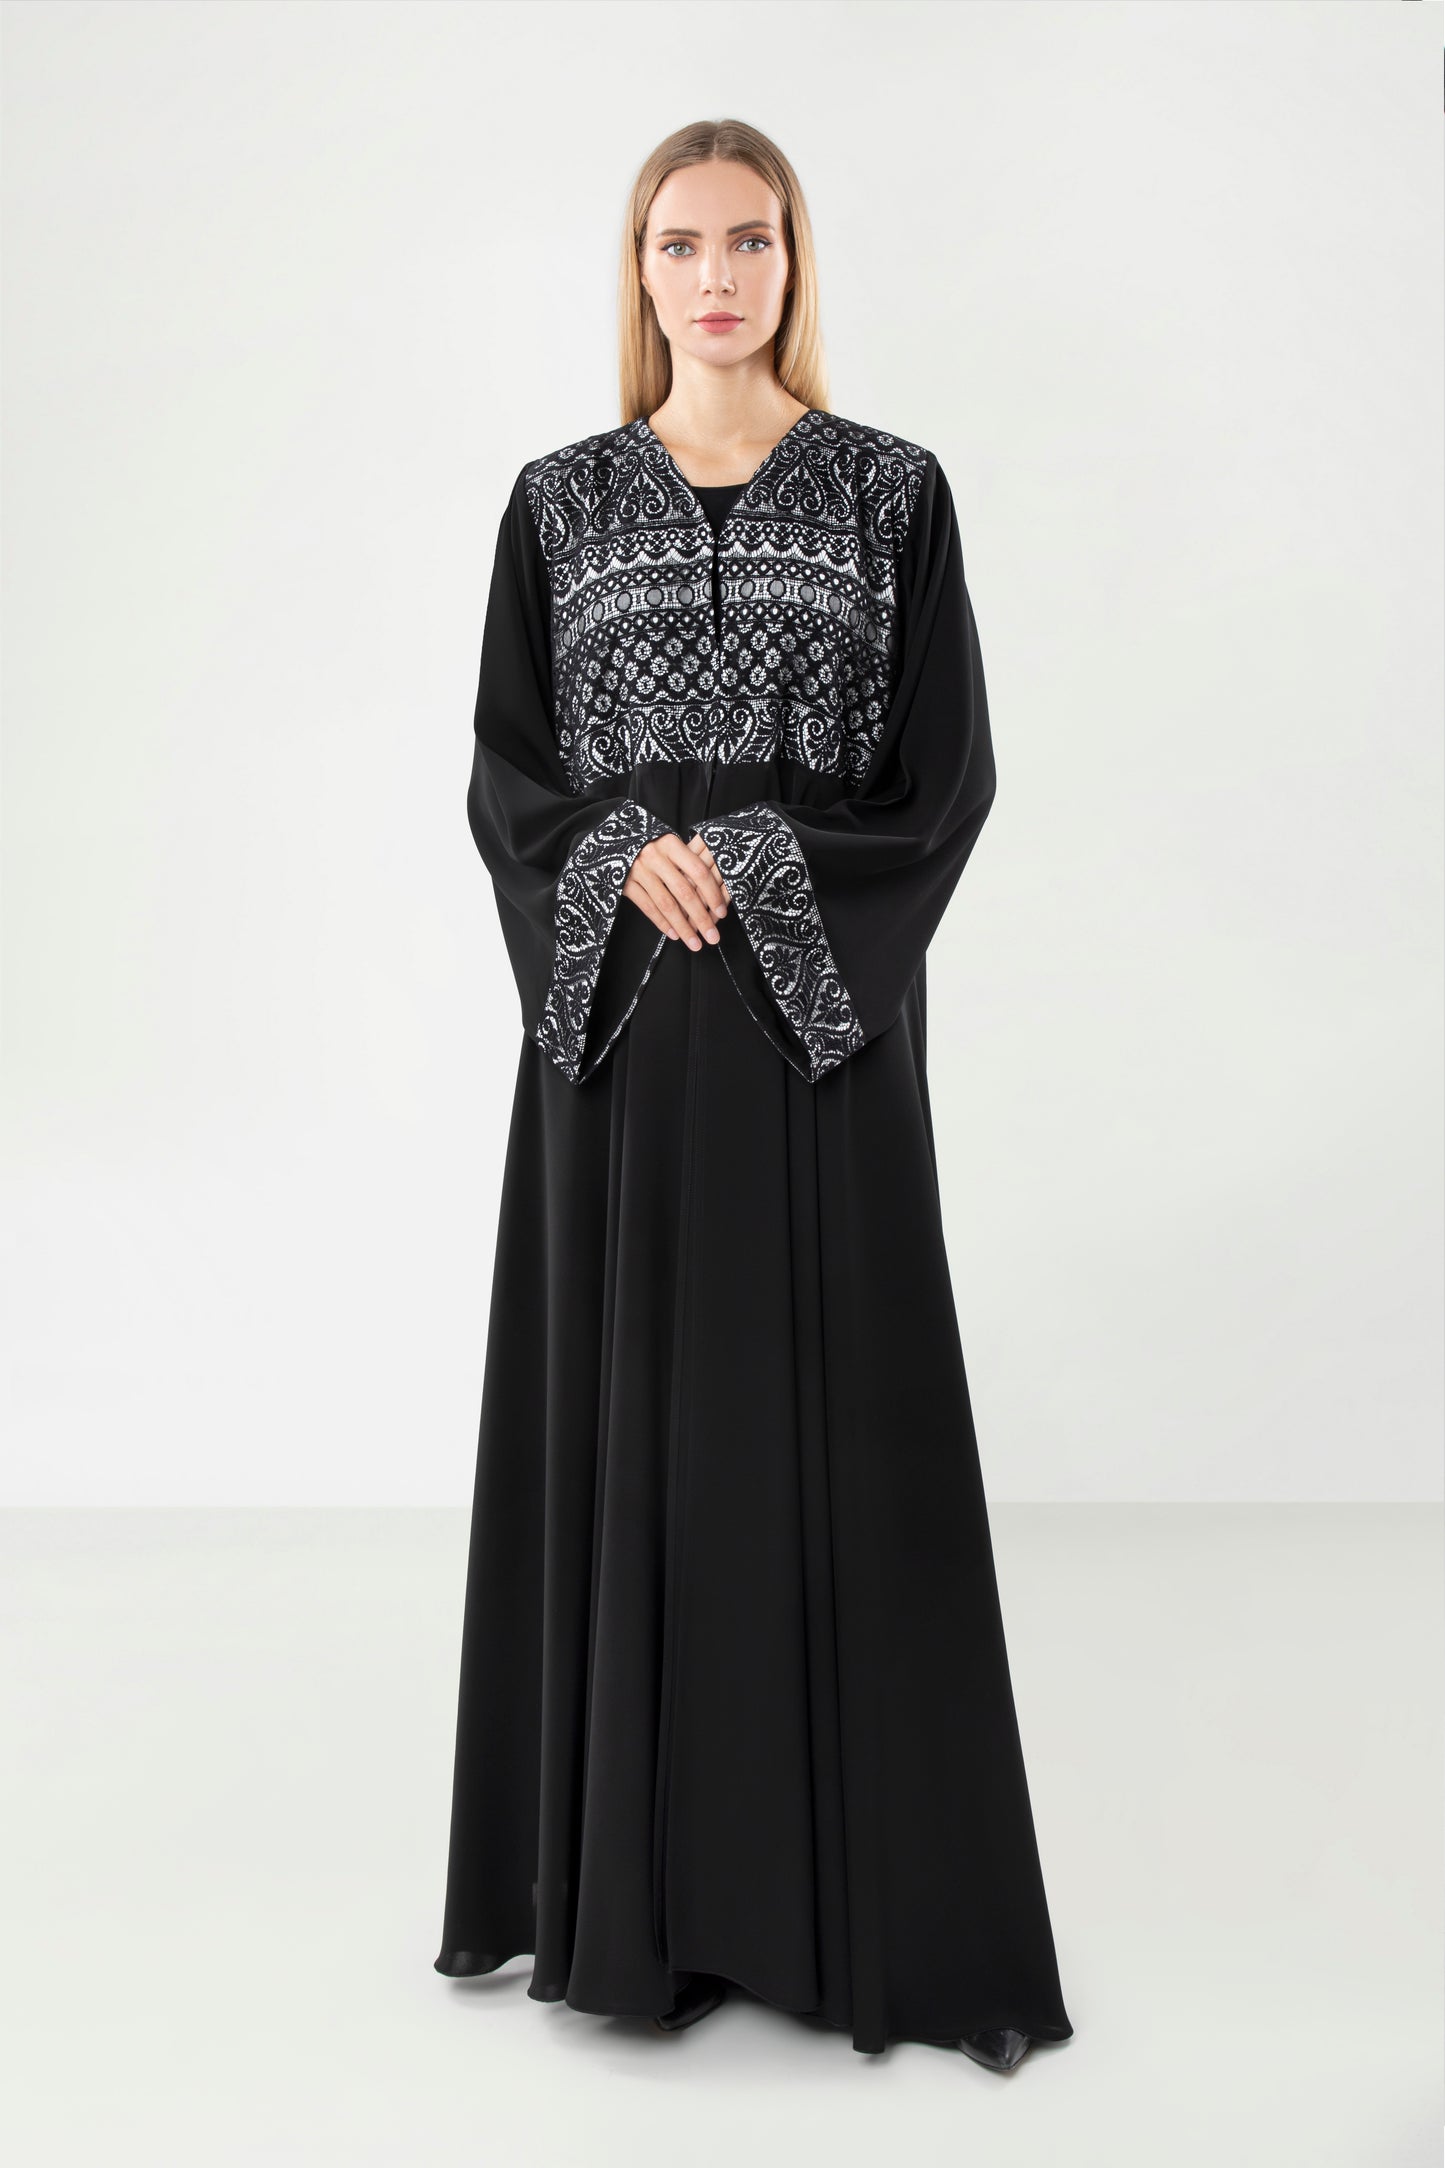 Classic Abaya Design